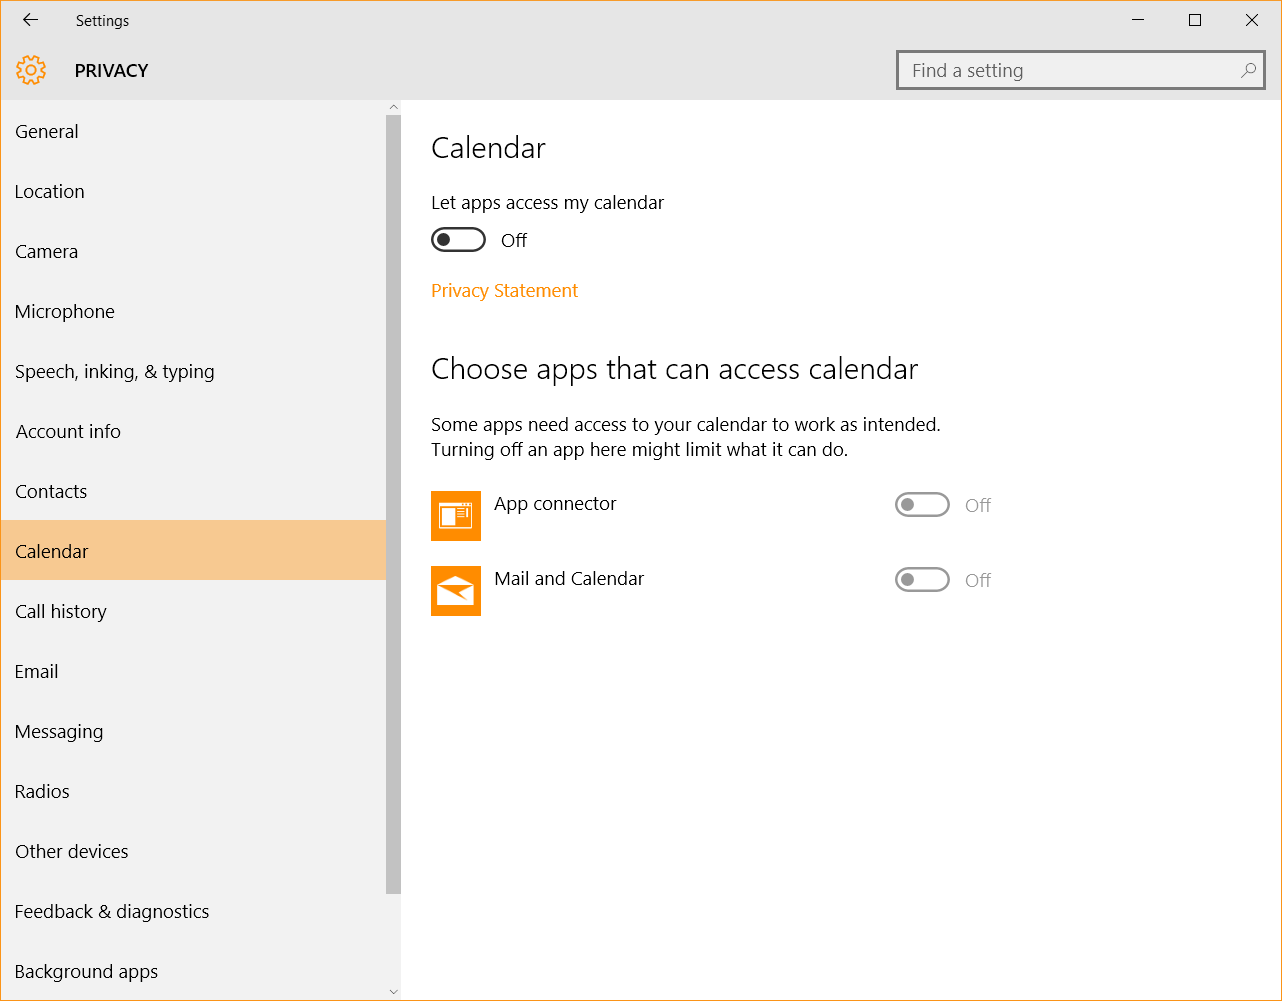 Windows 10 Security Guide - Calendar Privacy Settings